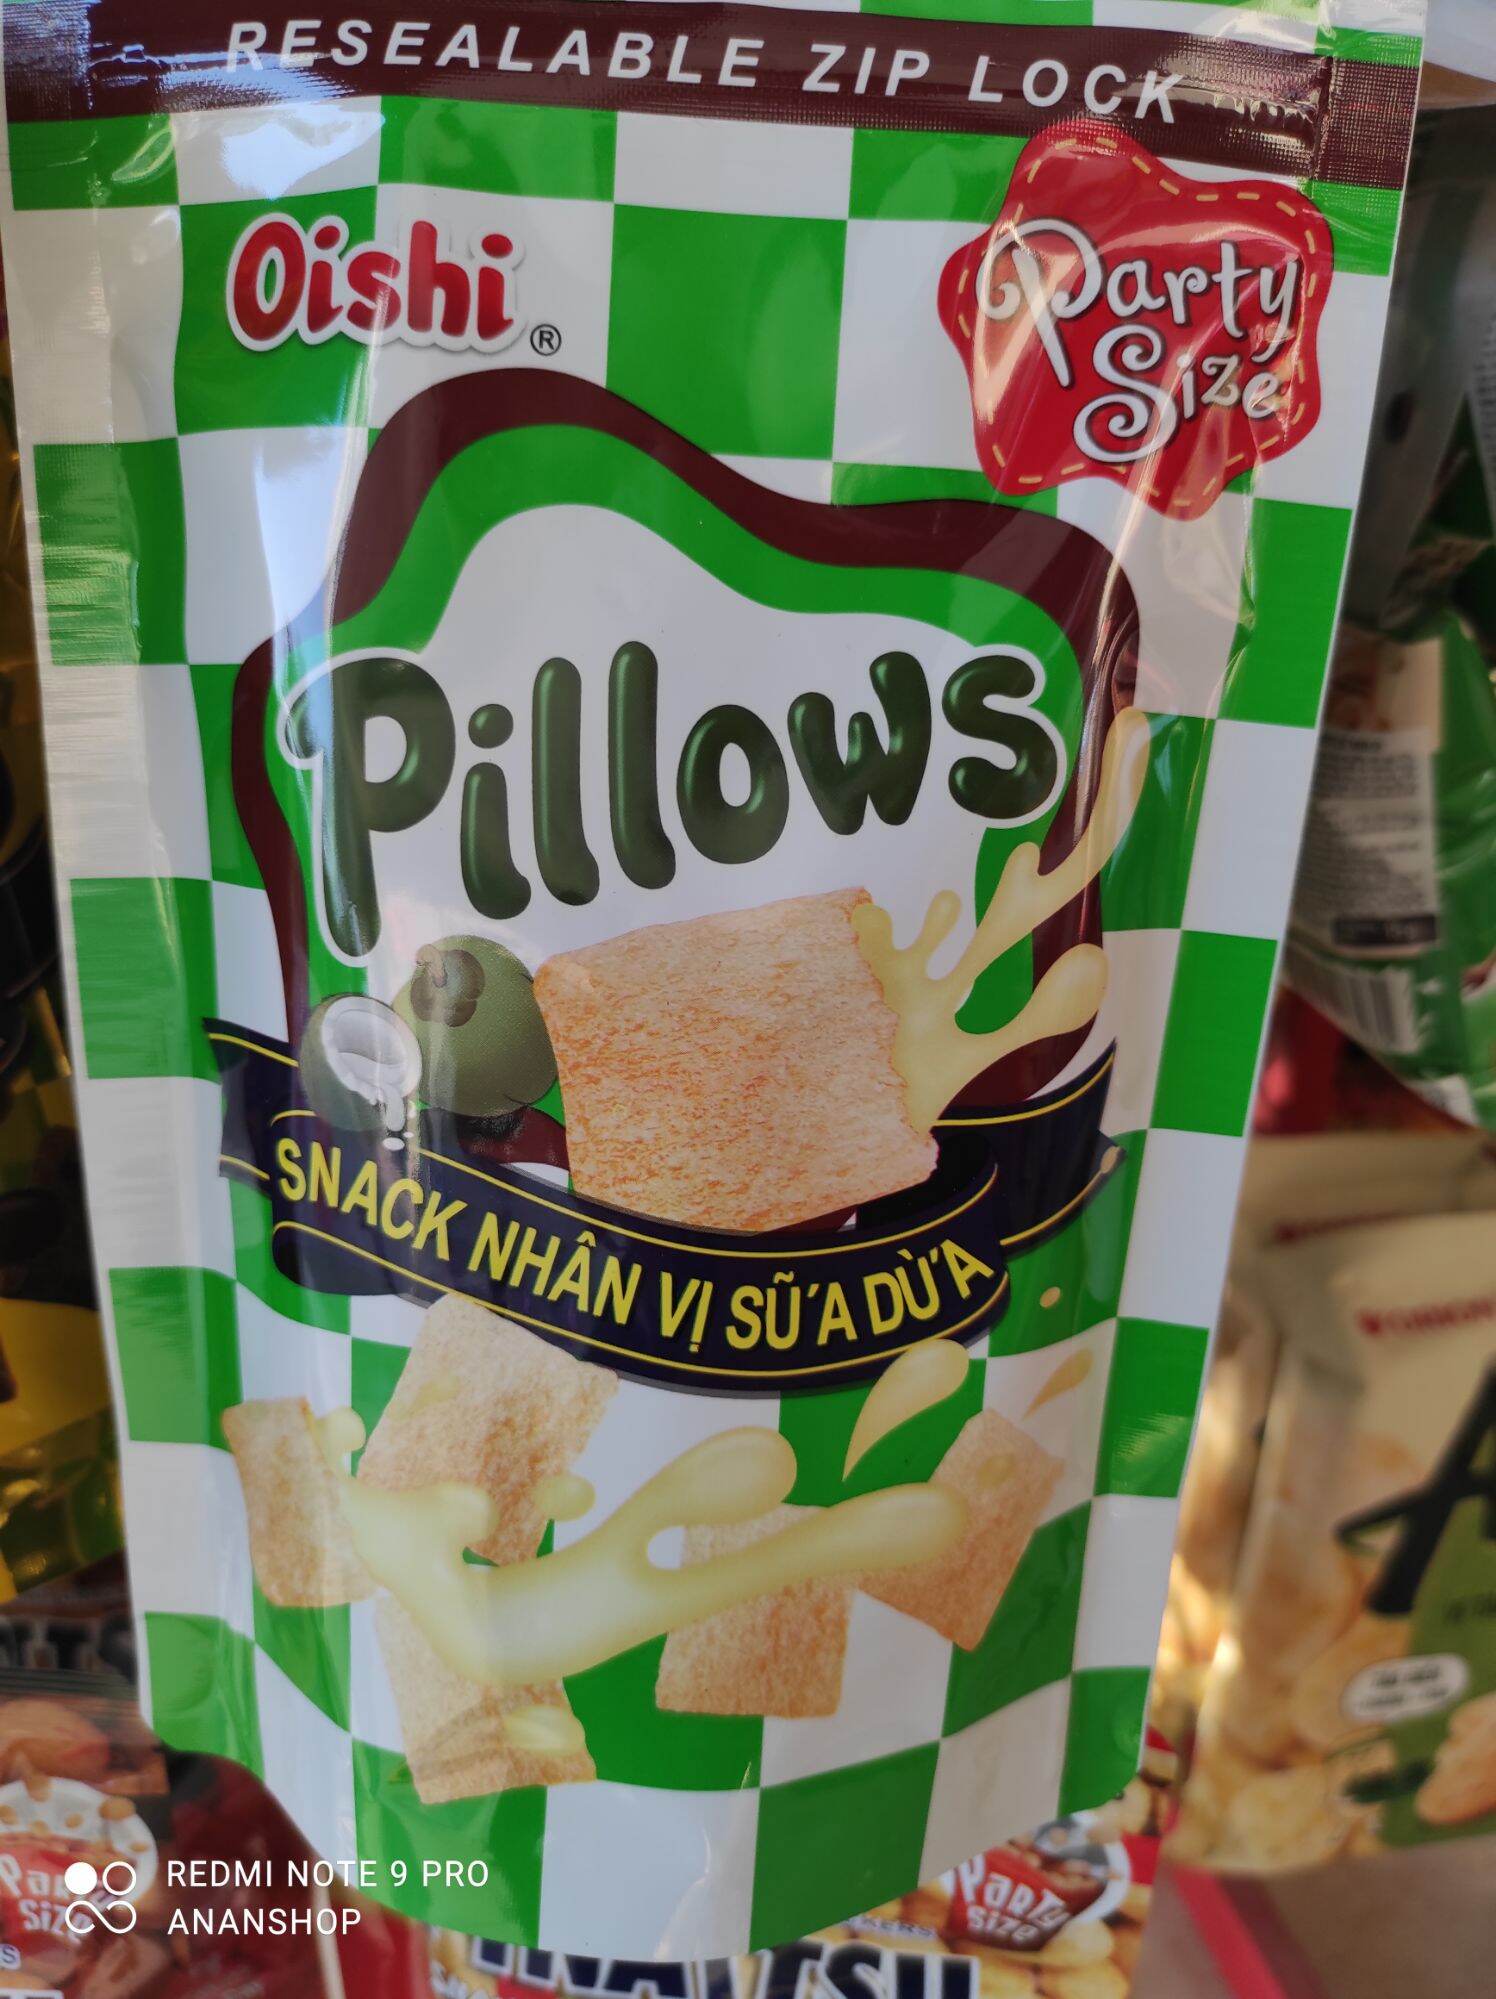 Snack Oishi Pillows nhân sữa dừa gói 85g, Party size